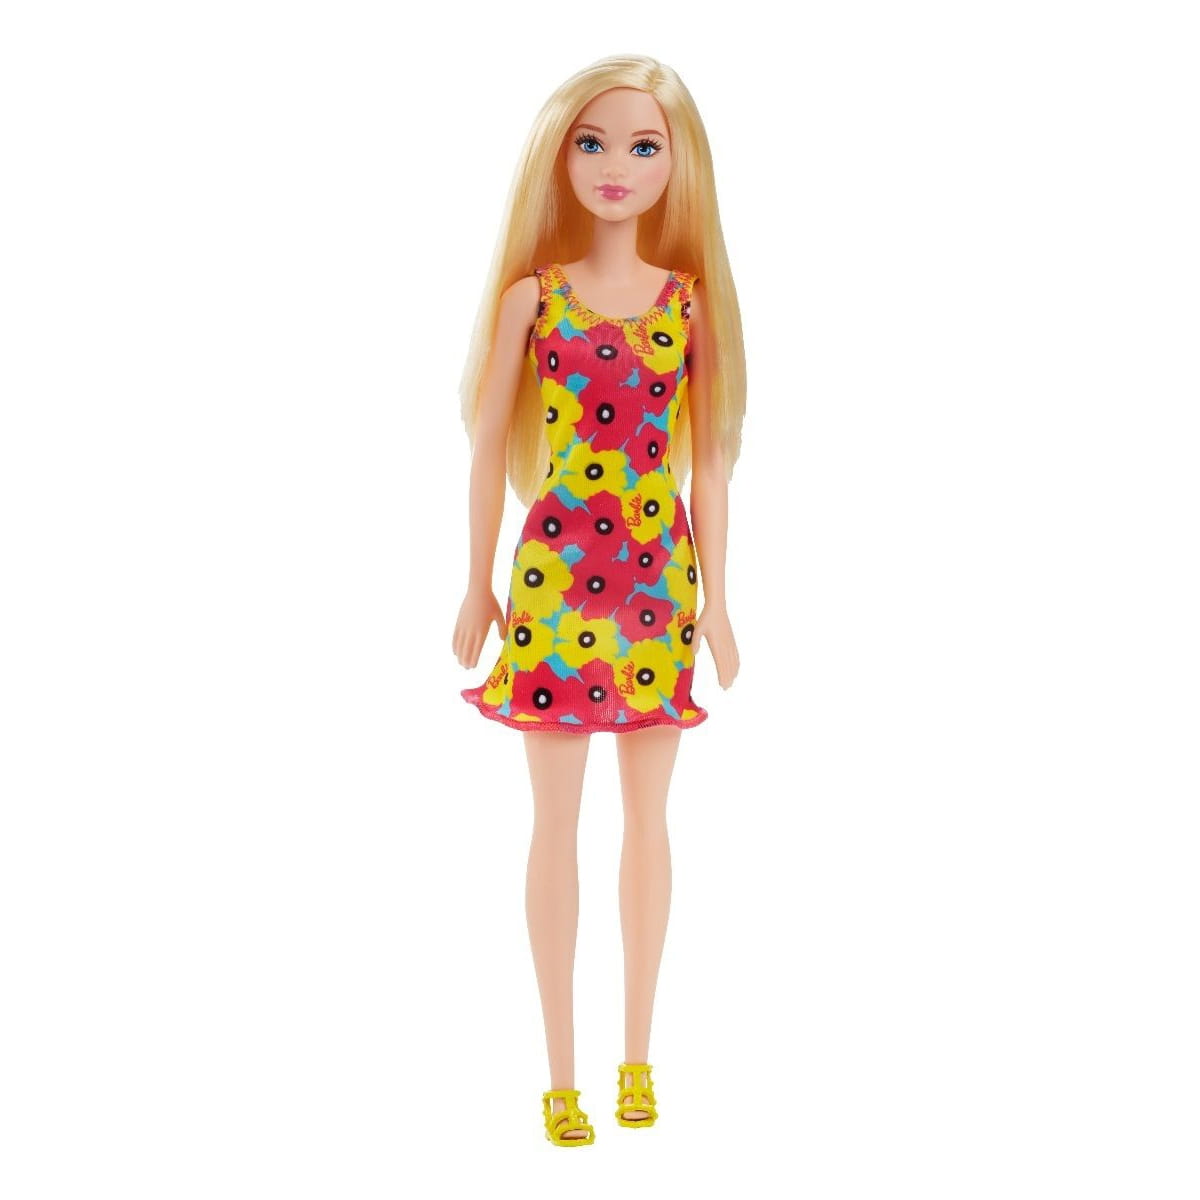   Barbie  -     (Mattel)